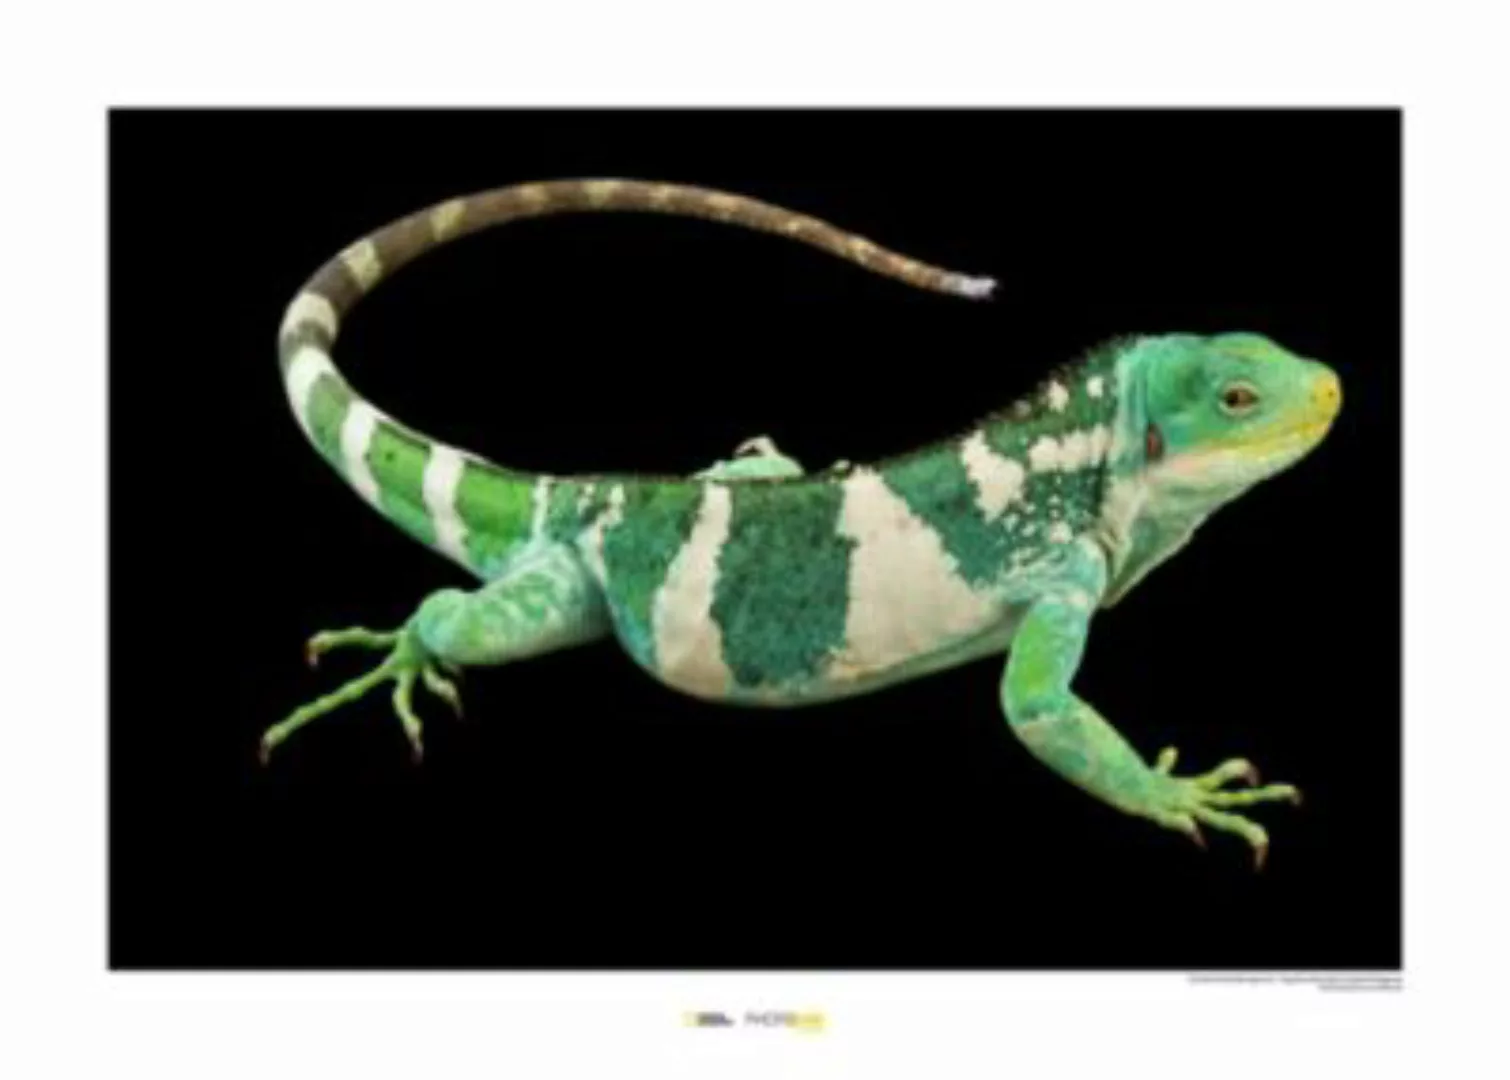 KOMAR Wandbild - Fiji Island Banded Iguana - Größe: 70 x 50 cm mehrfarbig G günstig online kaufen